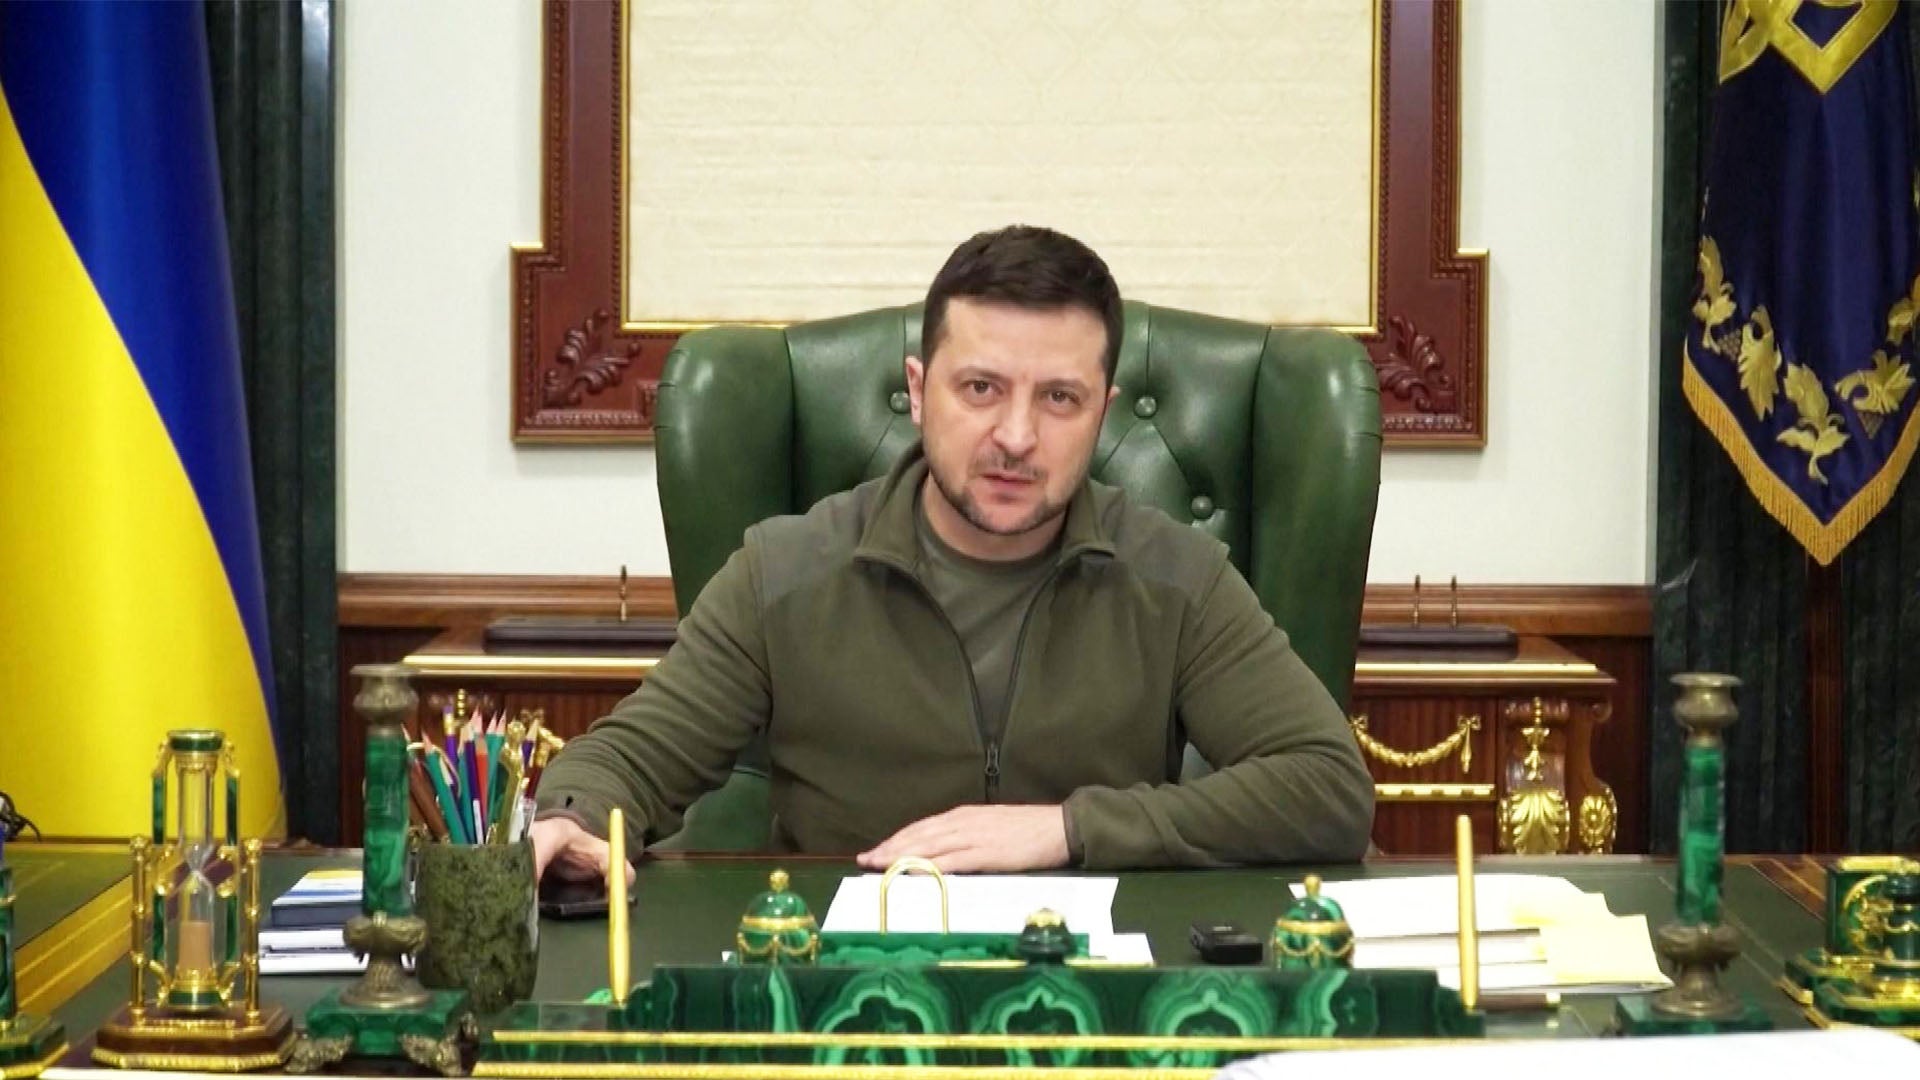 Zelenskyy Bravely Reveals He’s Still in Presidential Palace, Not in Hiding